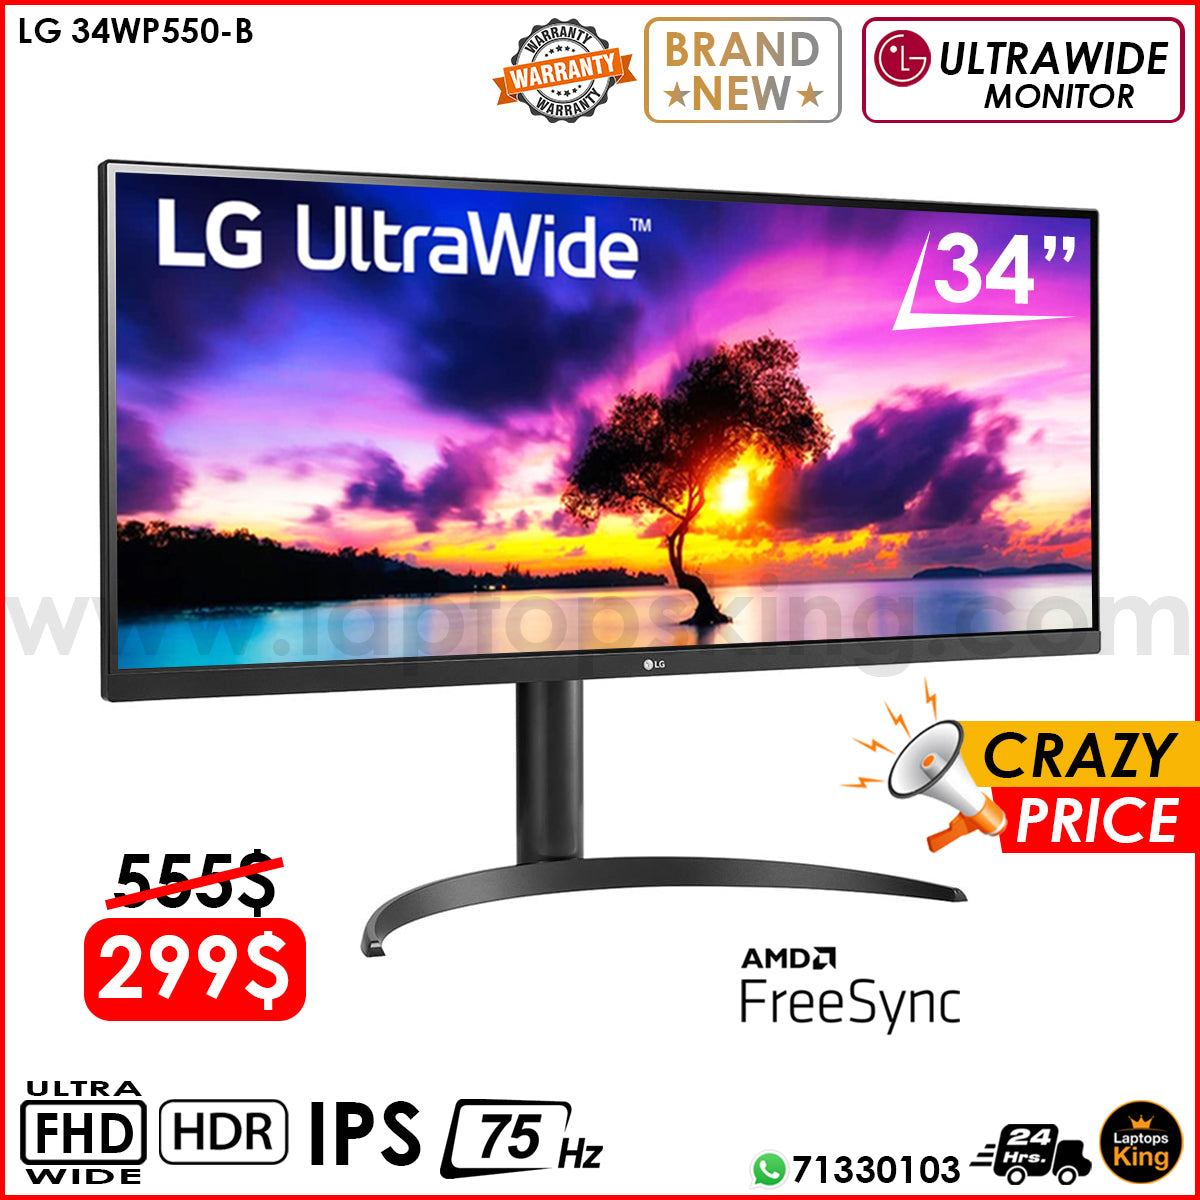 LG 34WP550-B 34" UltraWide FHD IPS HDR 75Hz Monitor (Brand New)